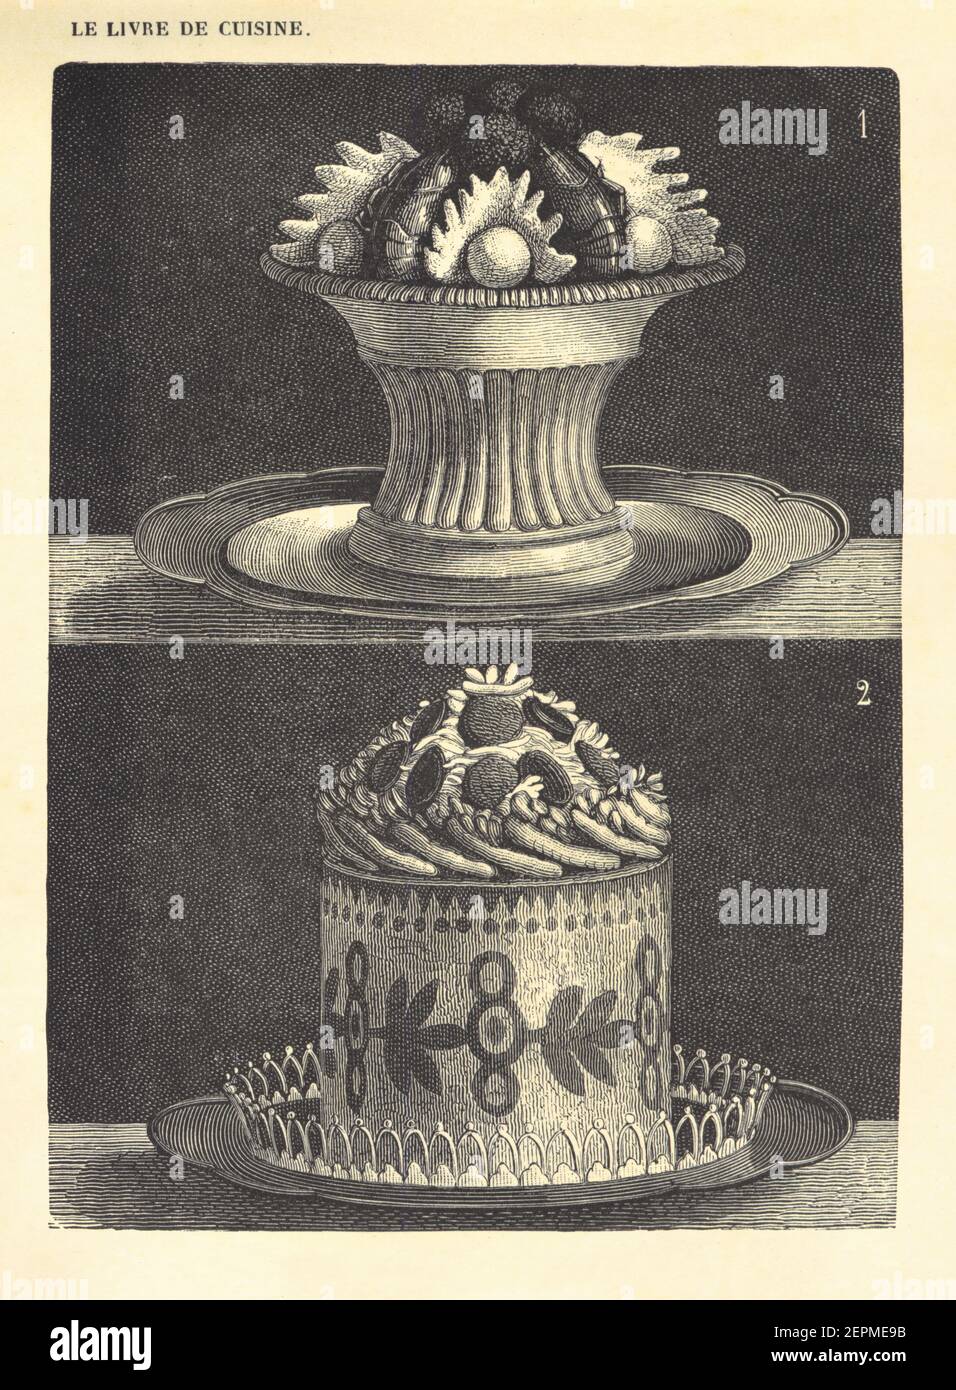 Antique illustration of classic French recipes - Pate chaud a la financiere (1) and Timbale milanaise (2). Published in Le livre de cuisine, par Jules Stock Photo